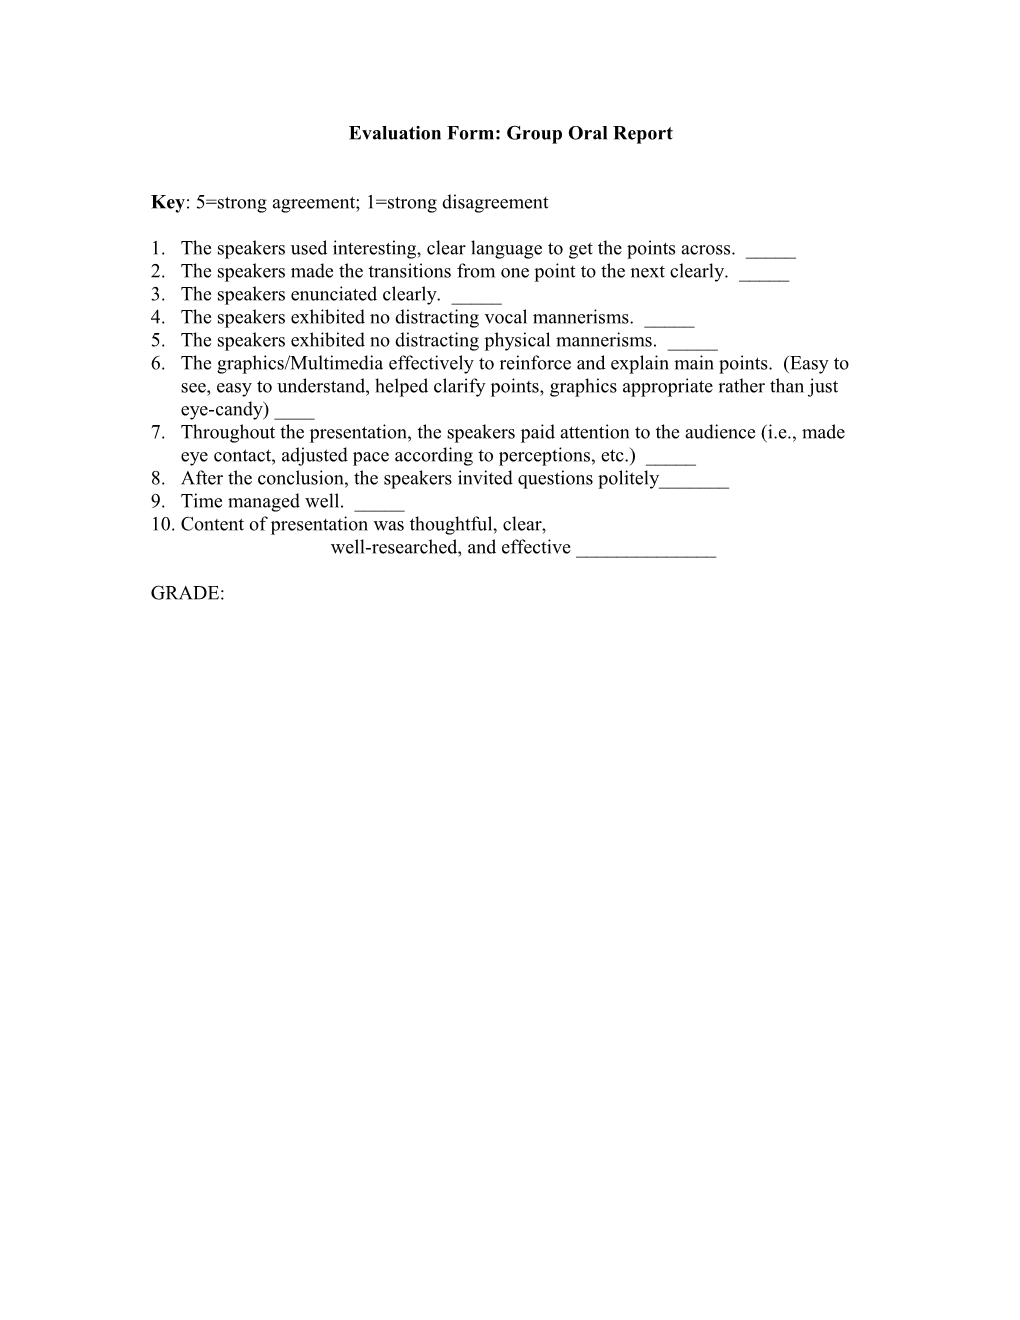 Evaluation Form: Oral Report